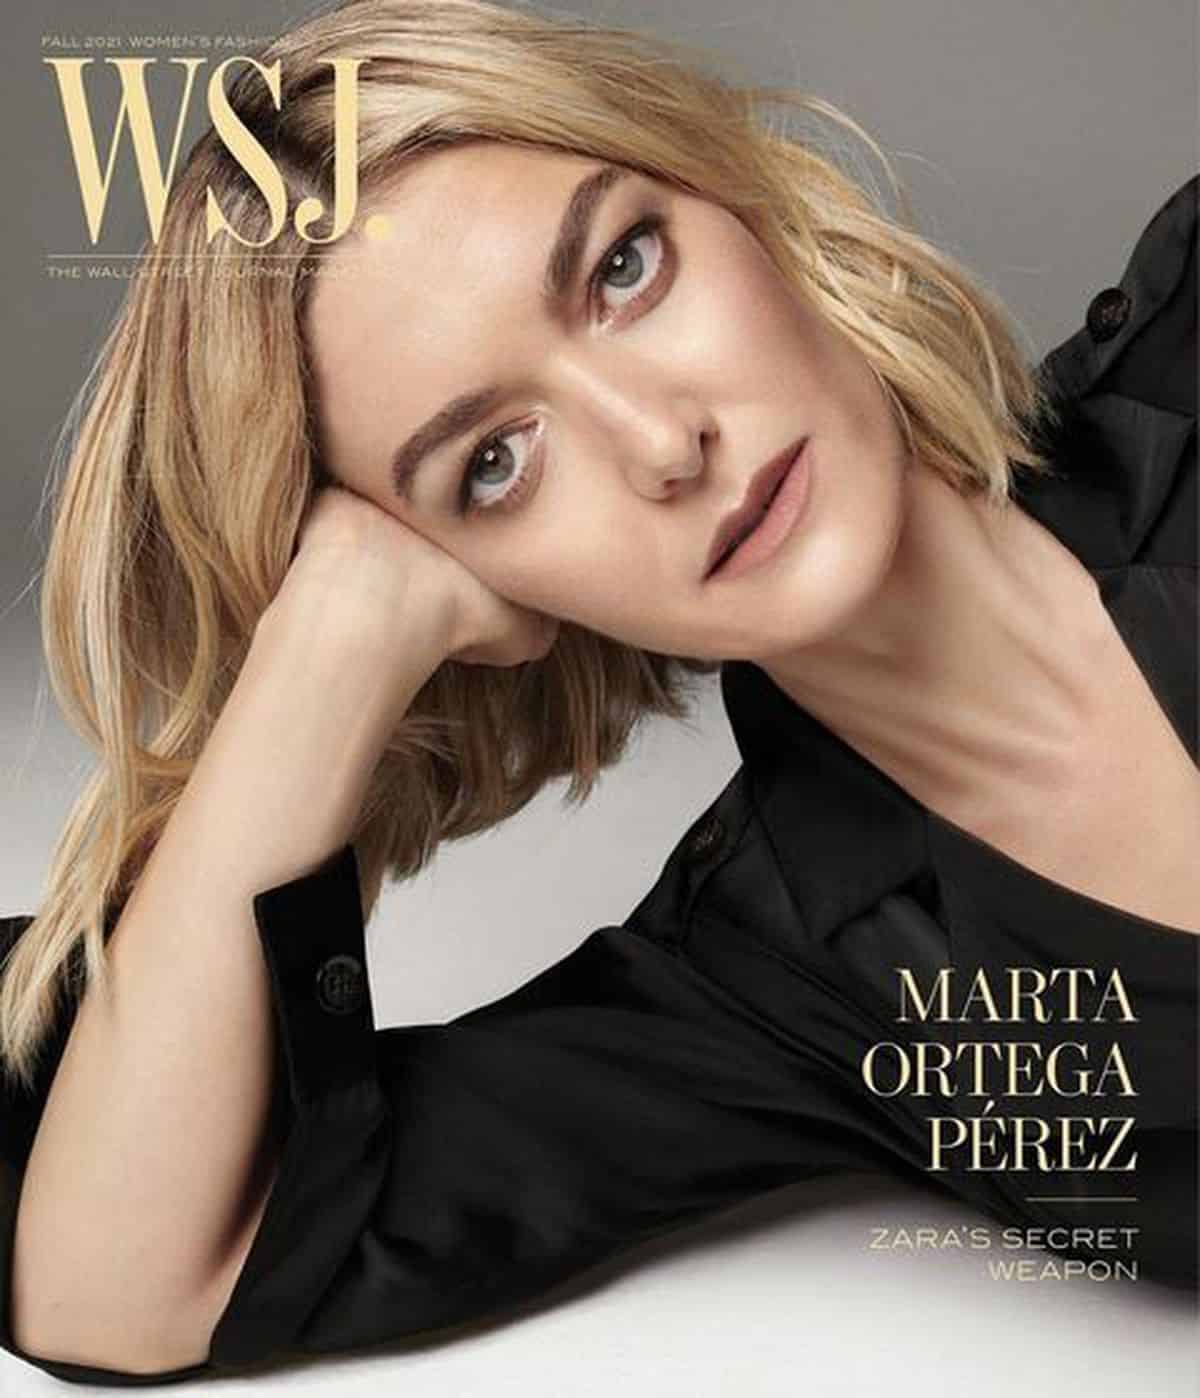 Marta Ortega, el "gran secreto de Zara" según 'The Wall Street Journal'